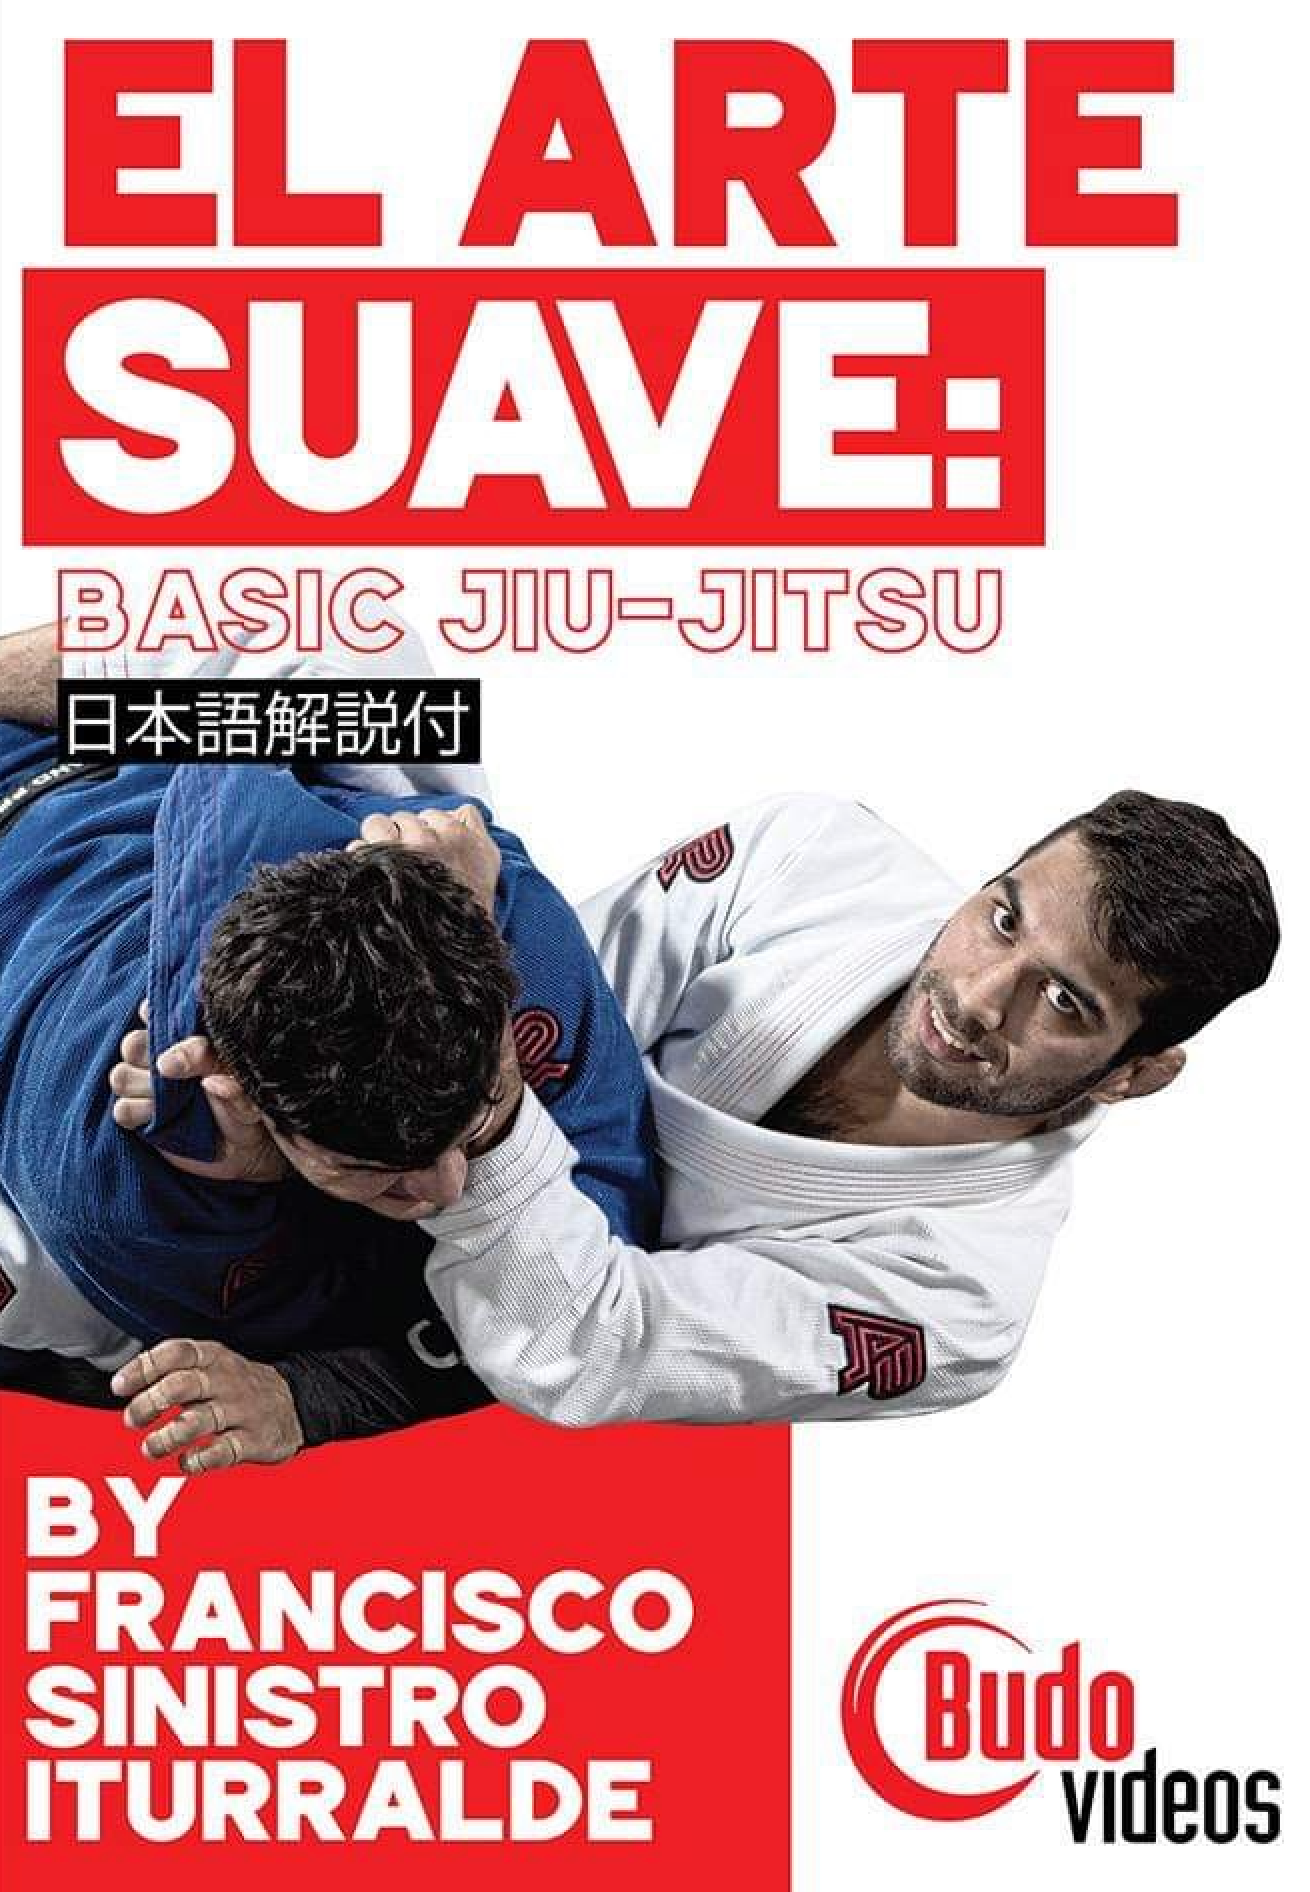 El Arte Suave: Basic Jiu-Jitsu DVD by Francisco Sinistro Iturralde